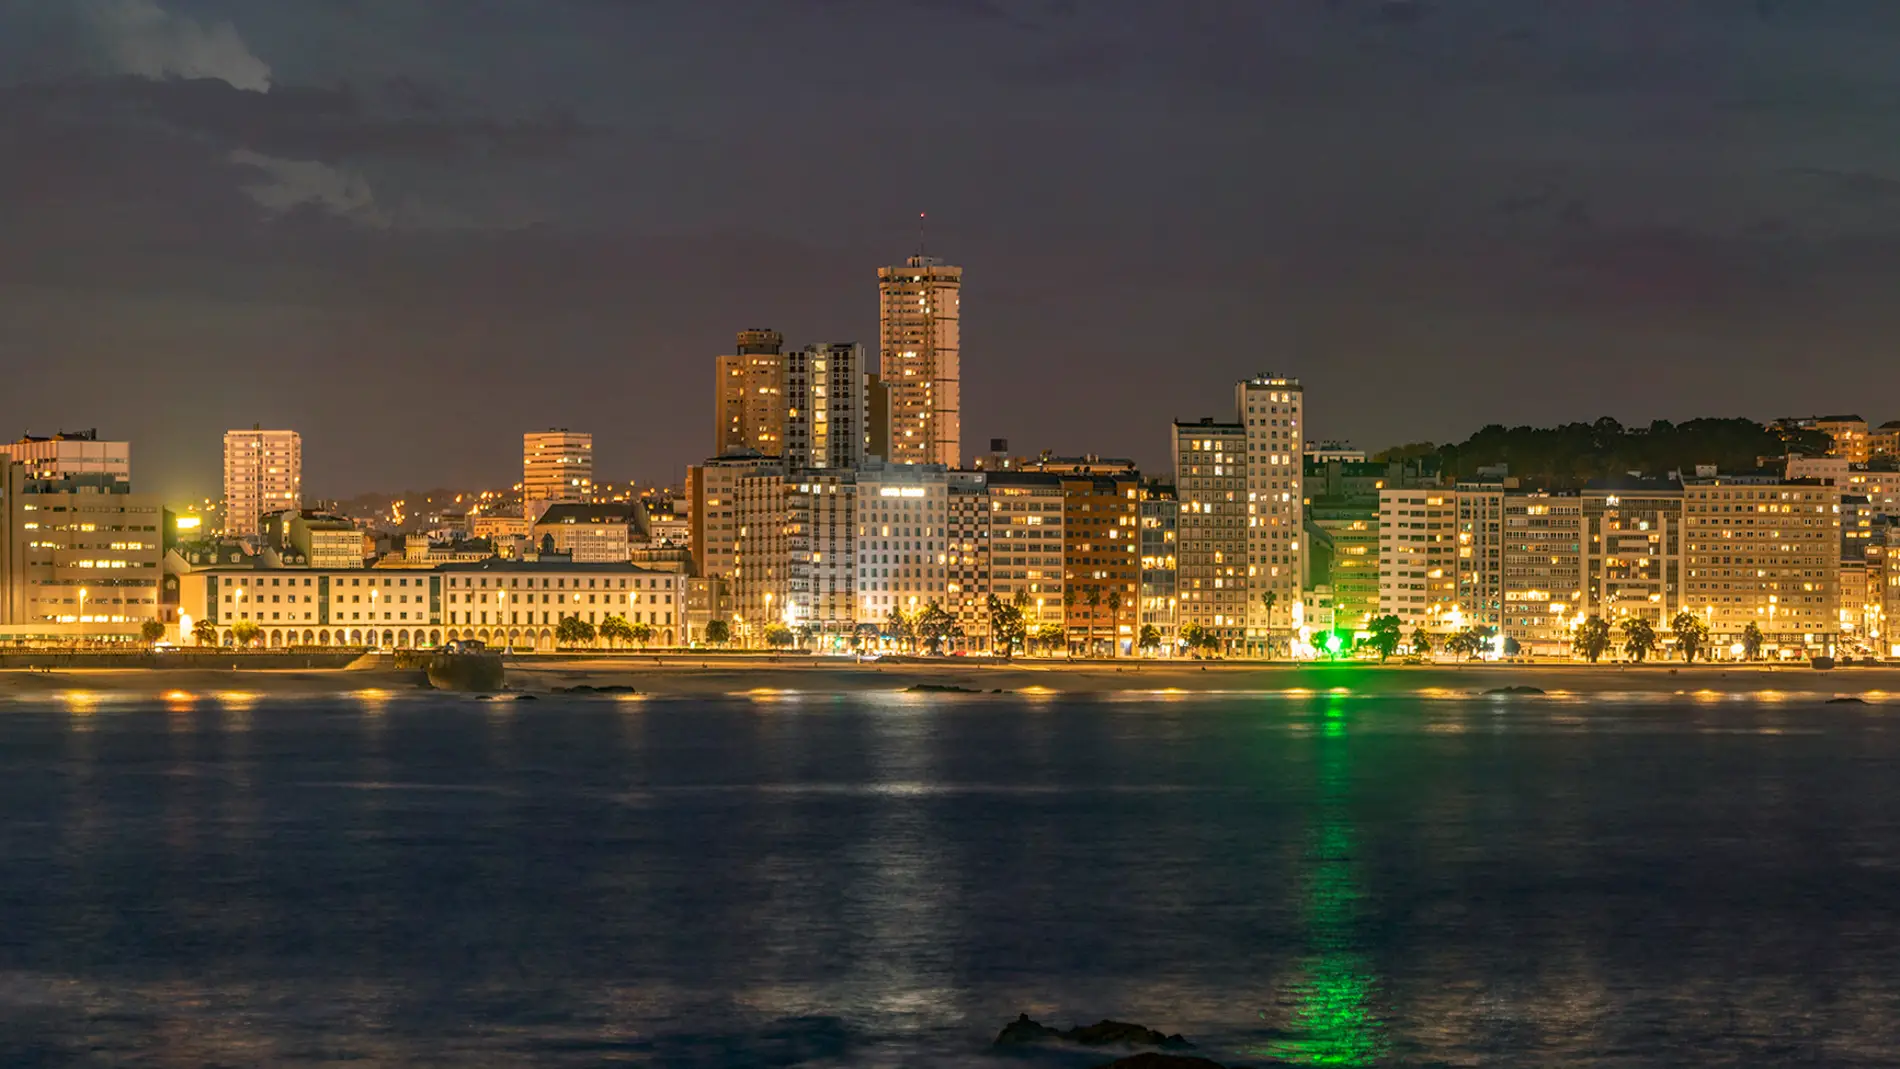 El Concello de A Coruña renovará el alumbrado público con fondos europeos 